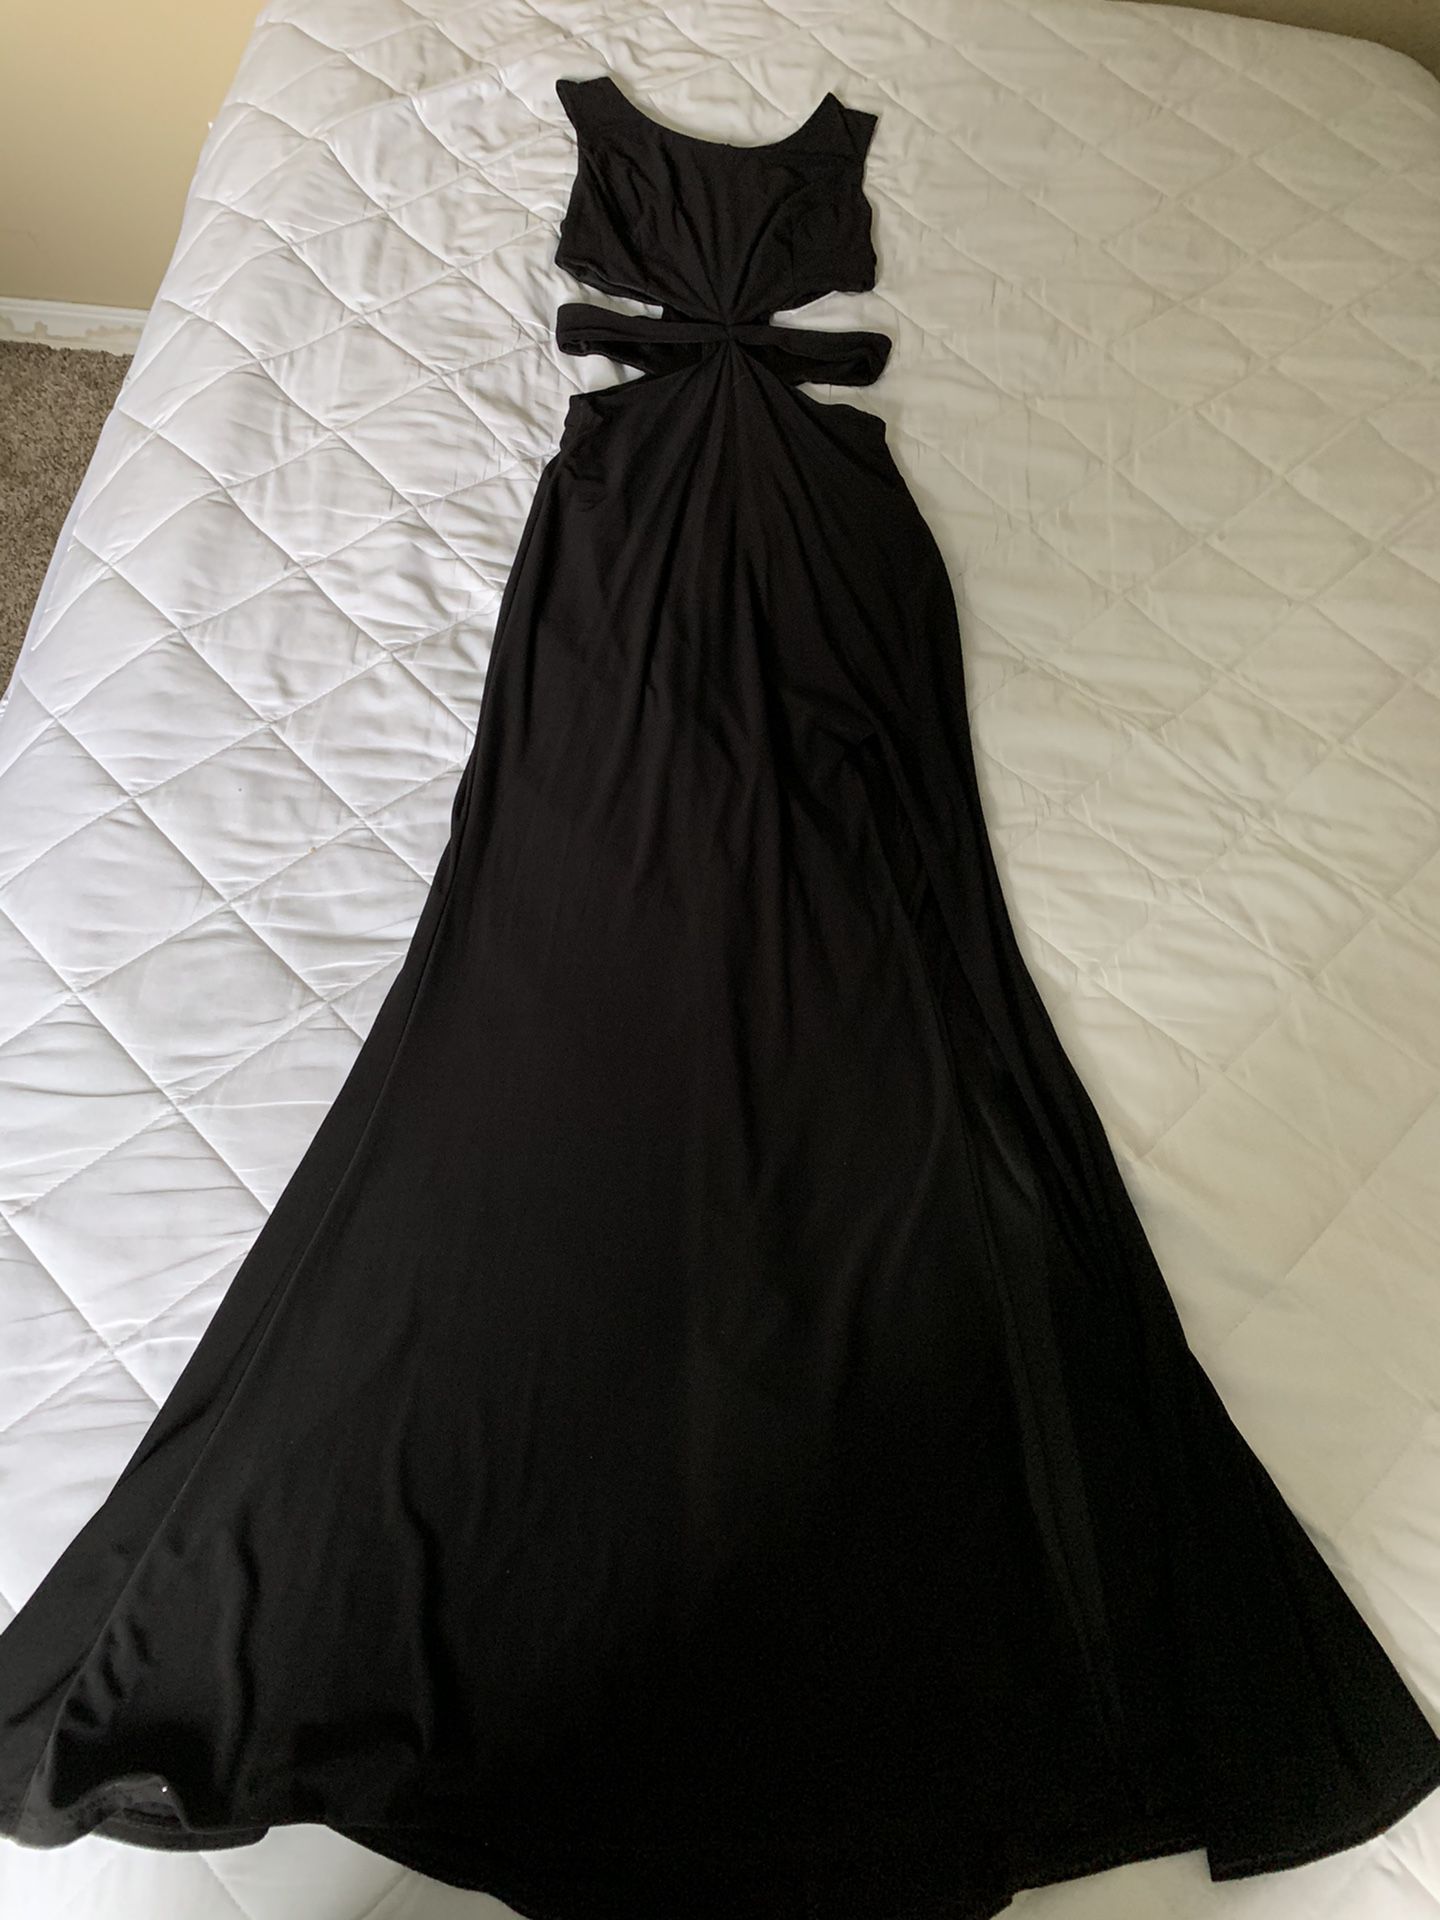 Prom dress size 3